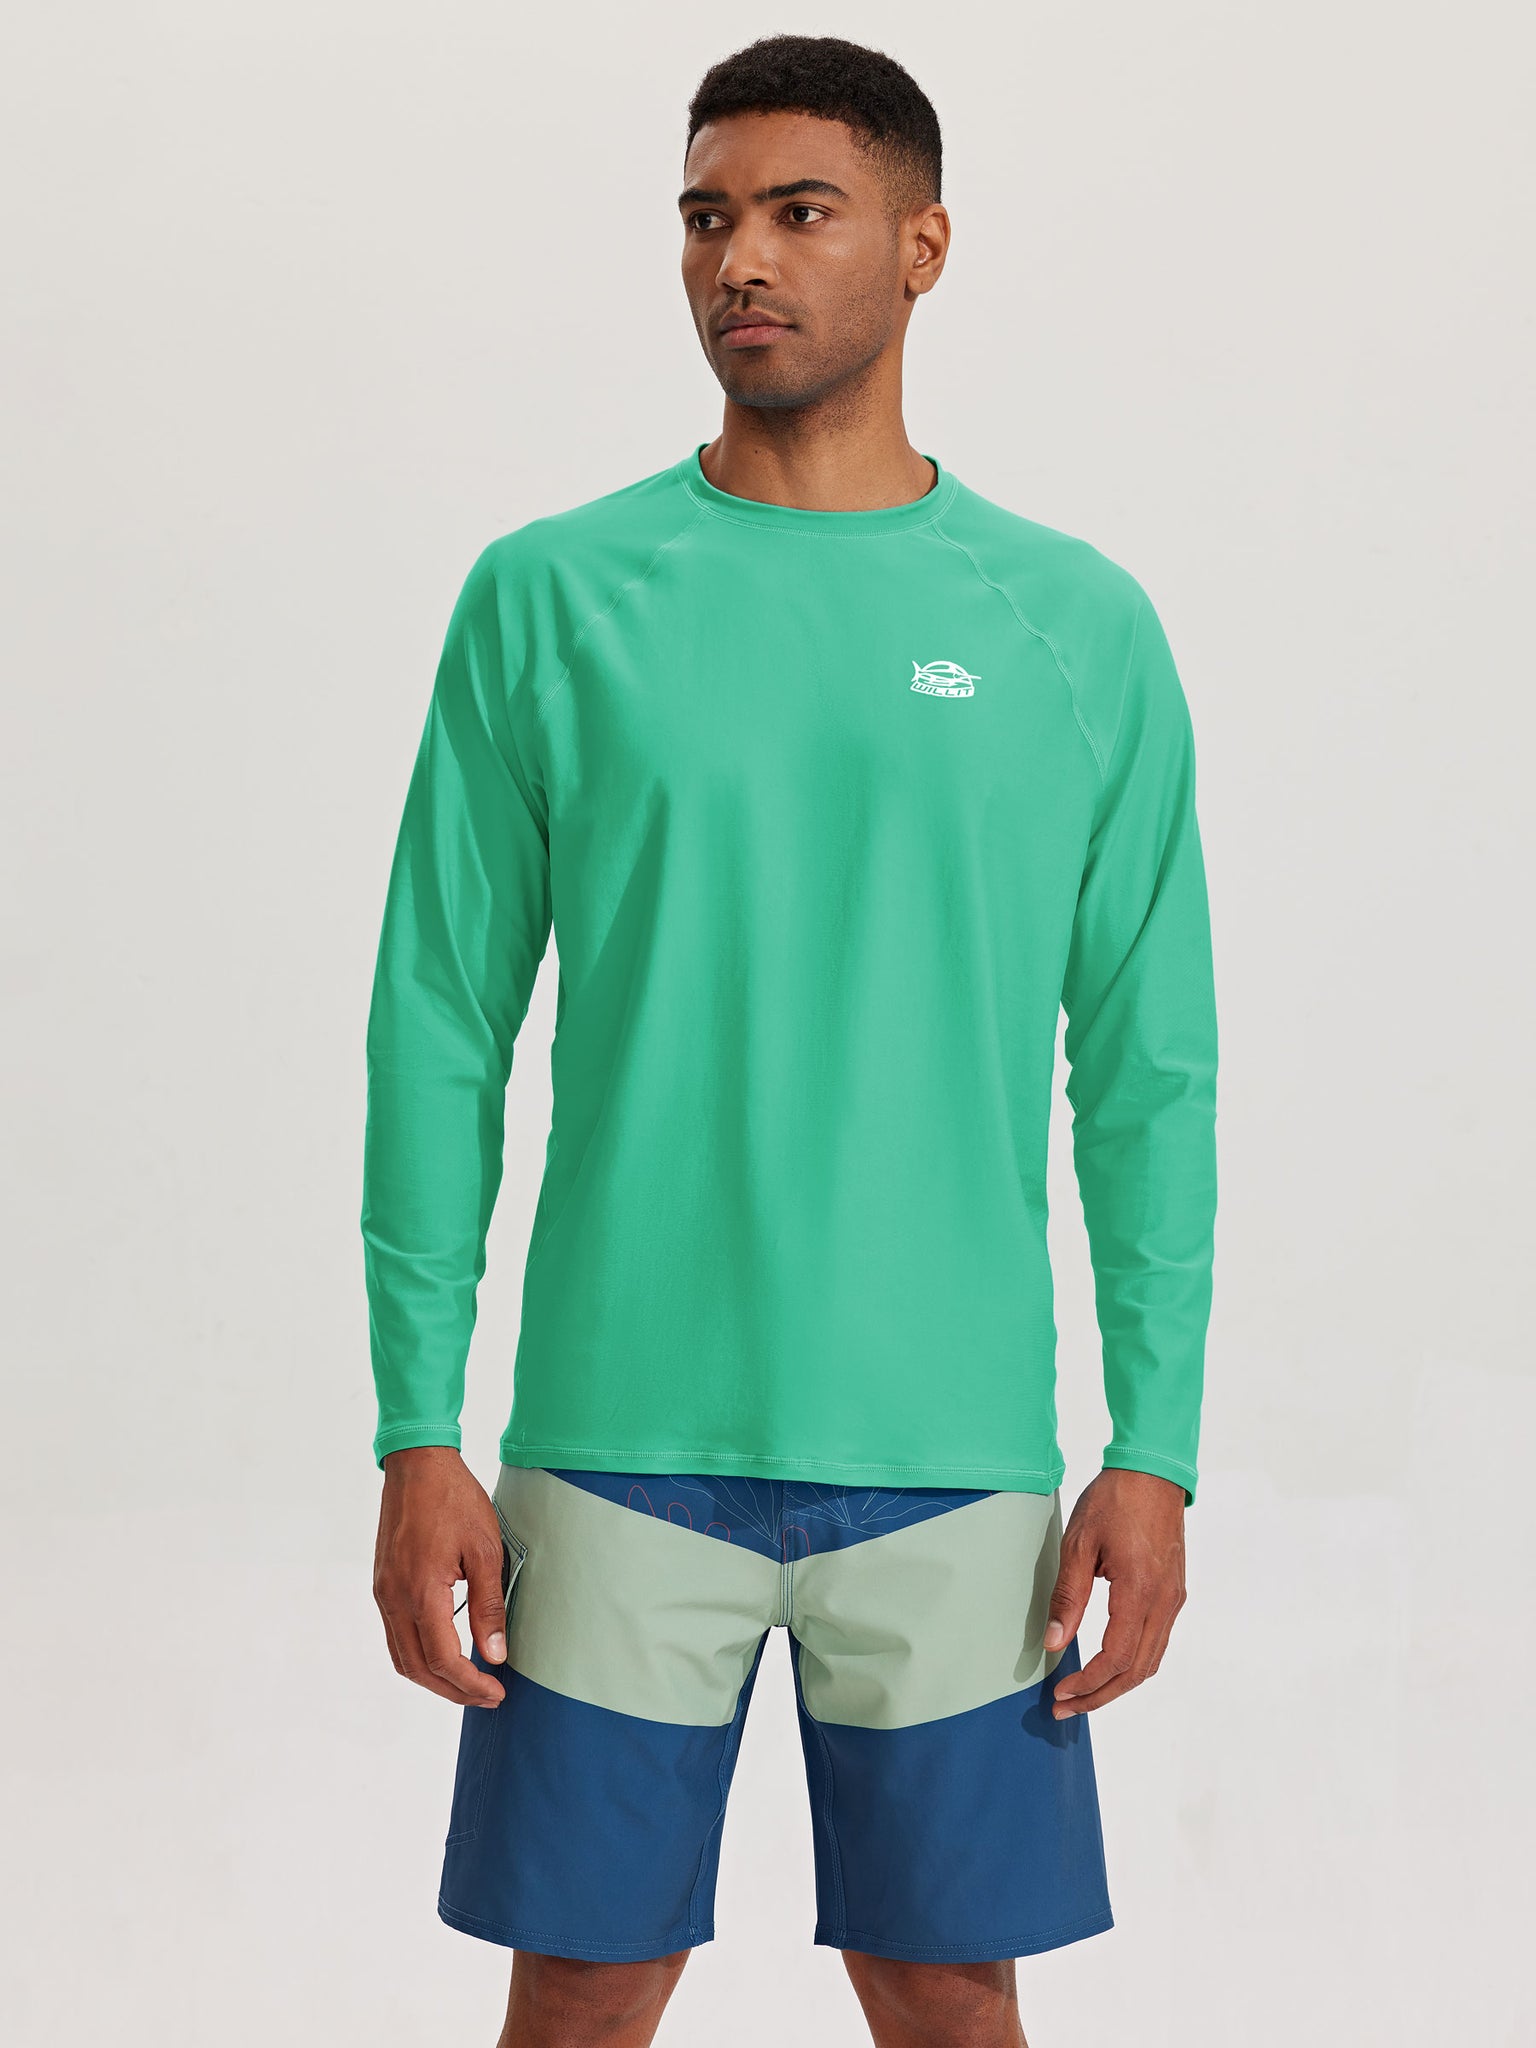 Men's Sun Protection Long Sleeve Shirt_Green_model2